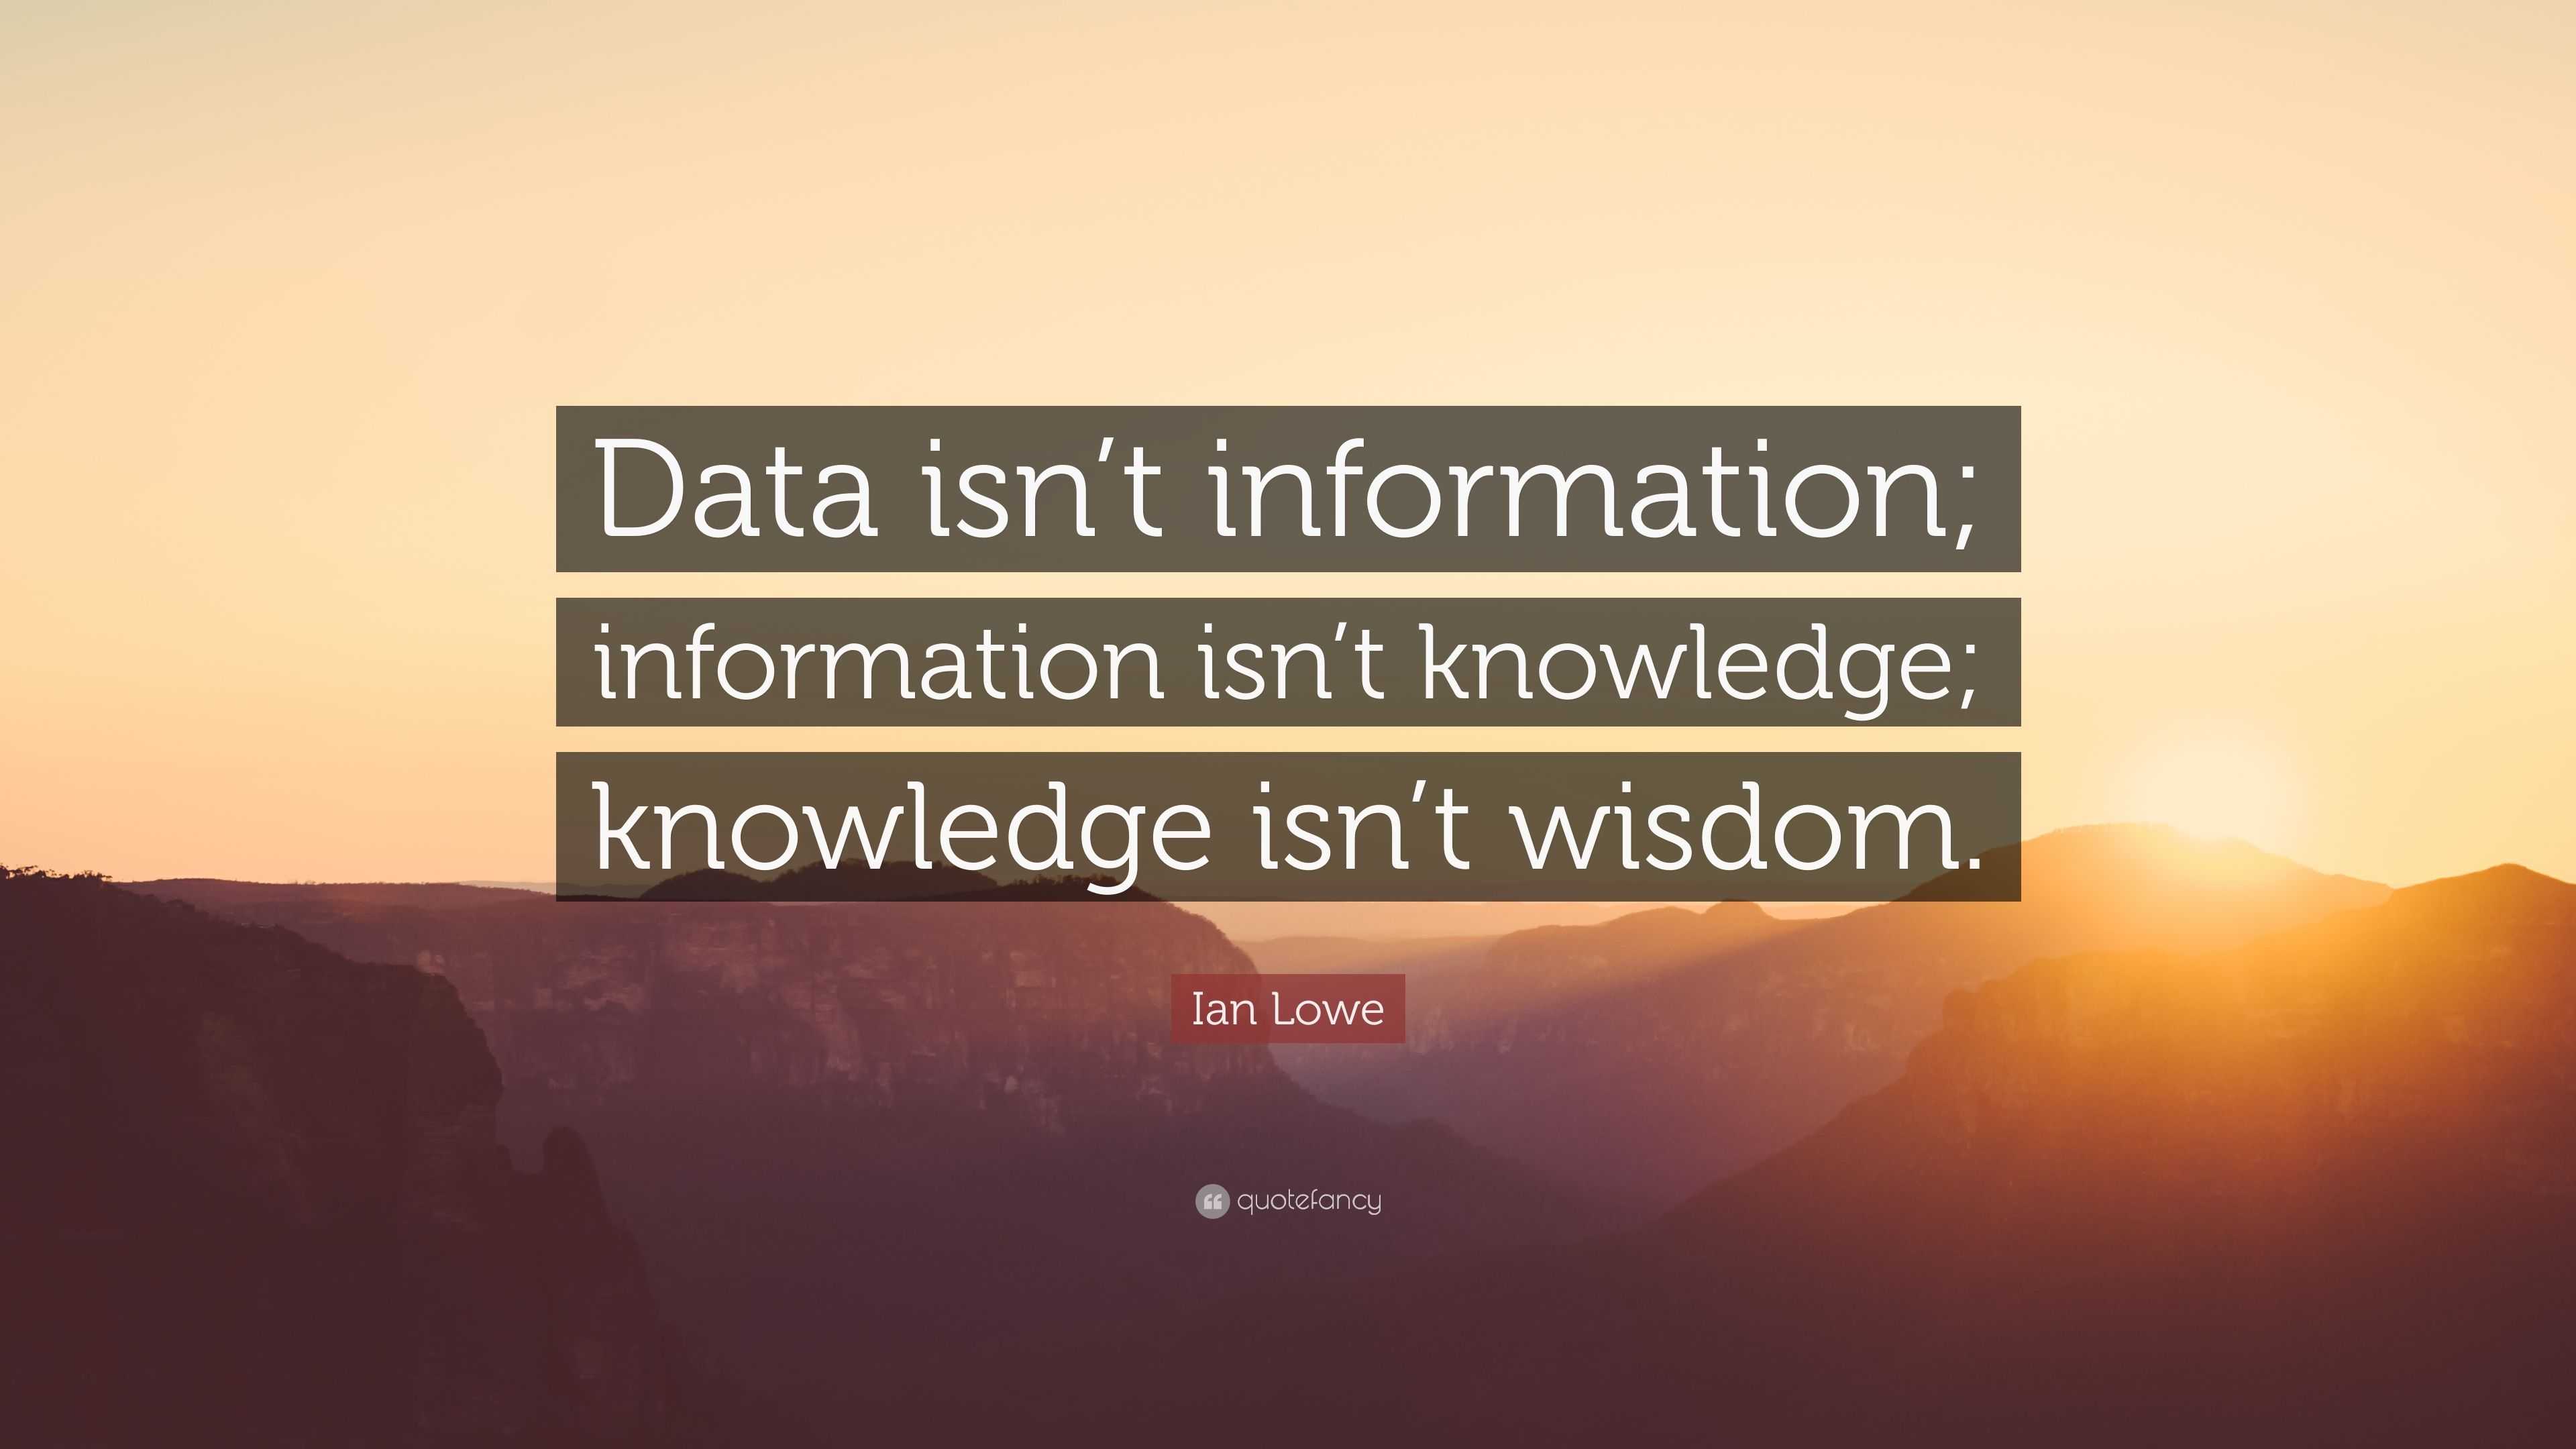 Ian Lowe Quote: “Data isn’t information; information isn’t knowledge